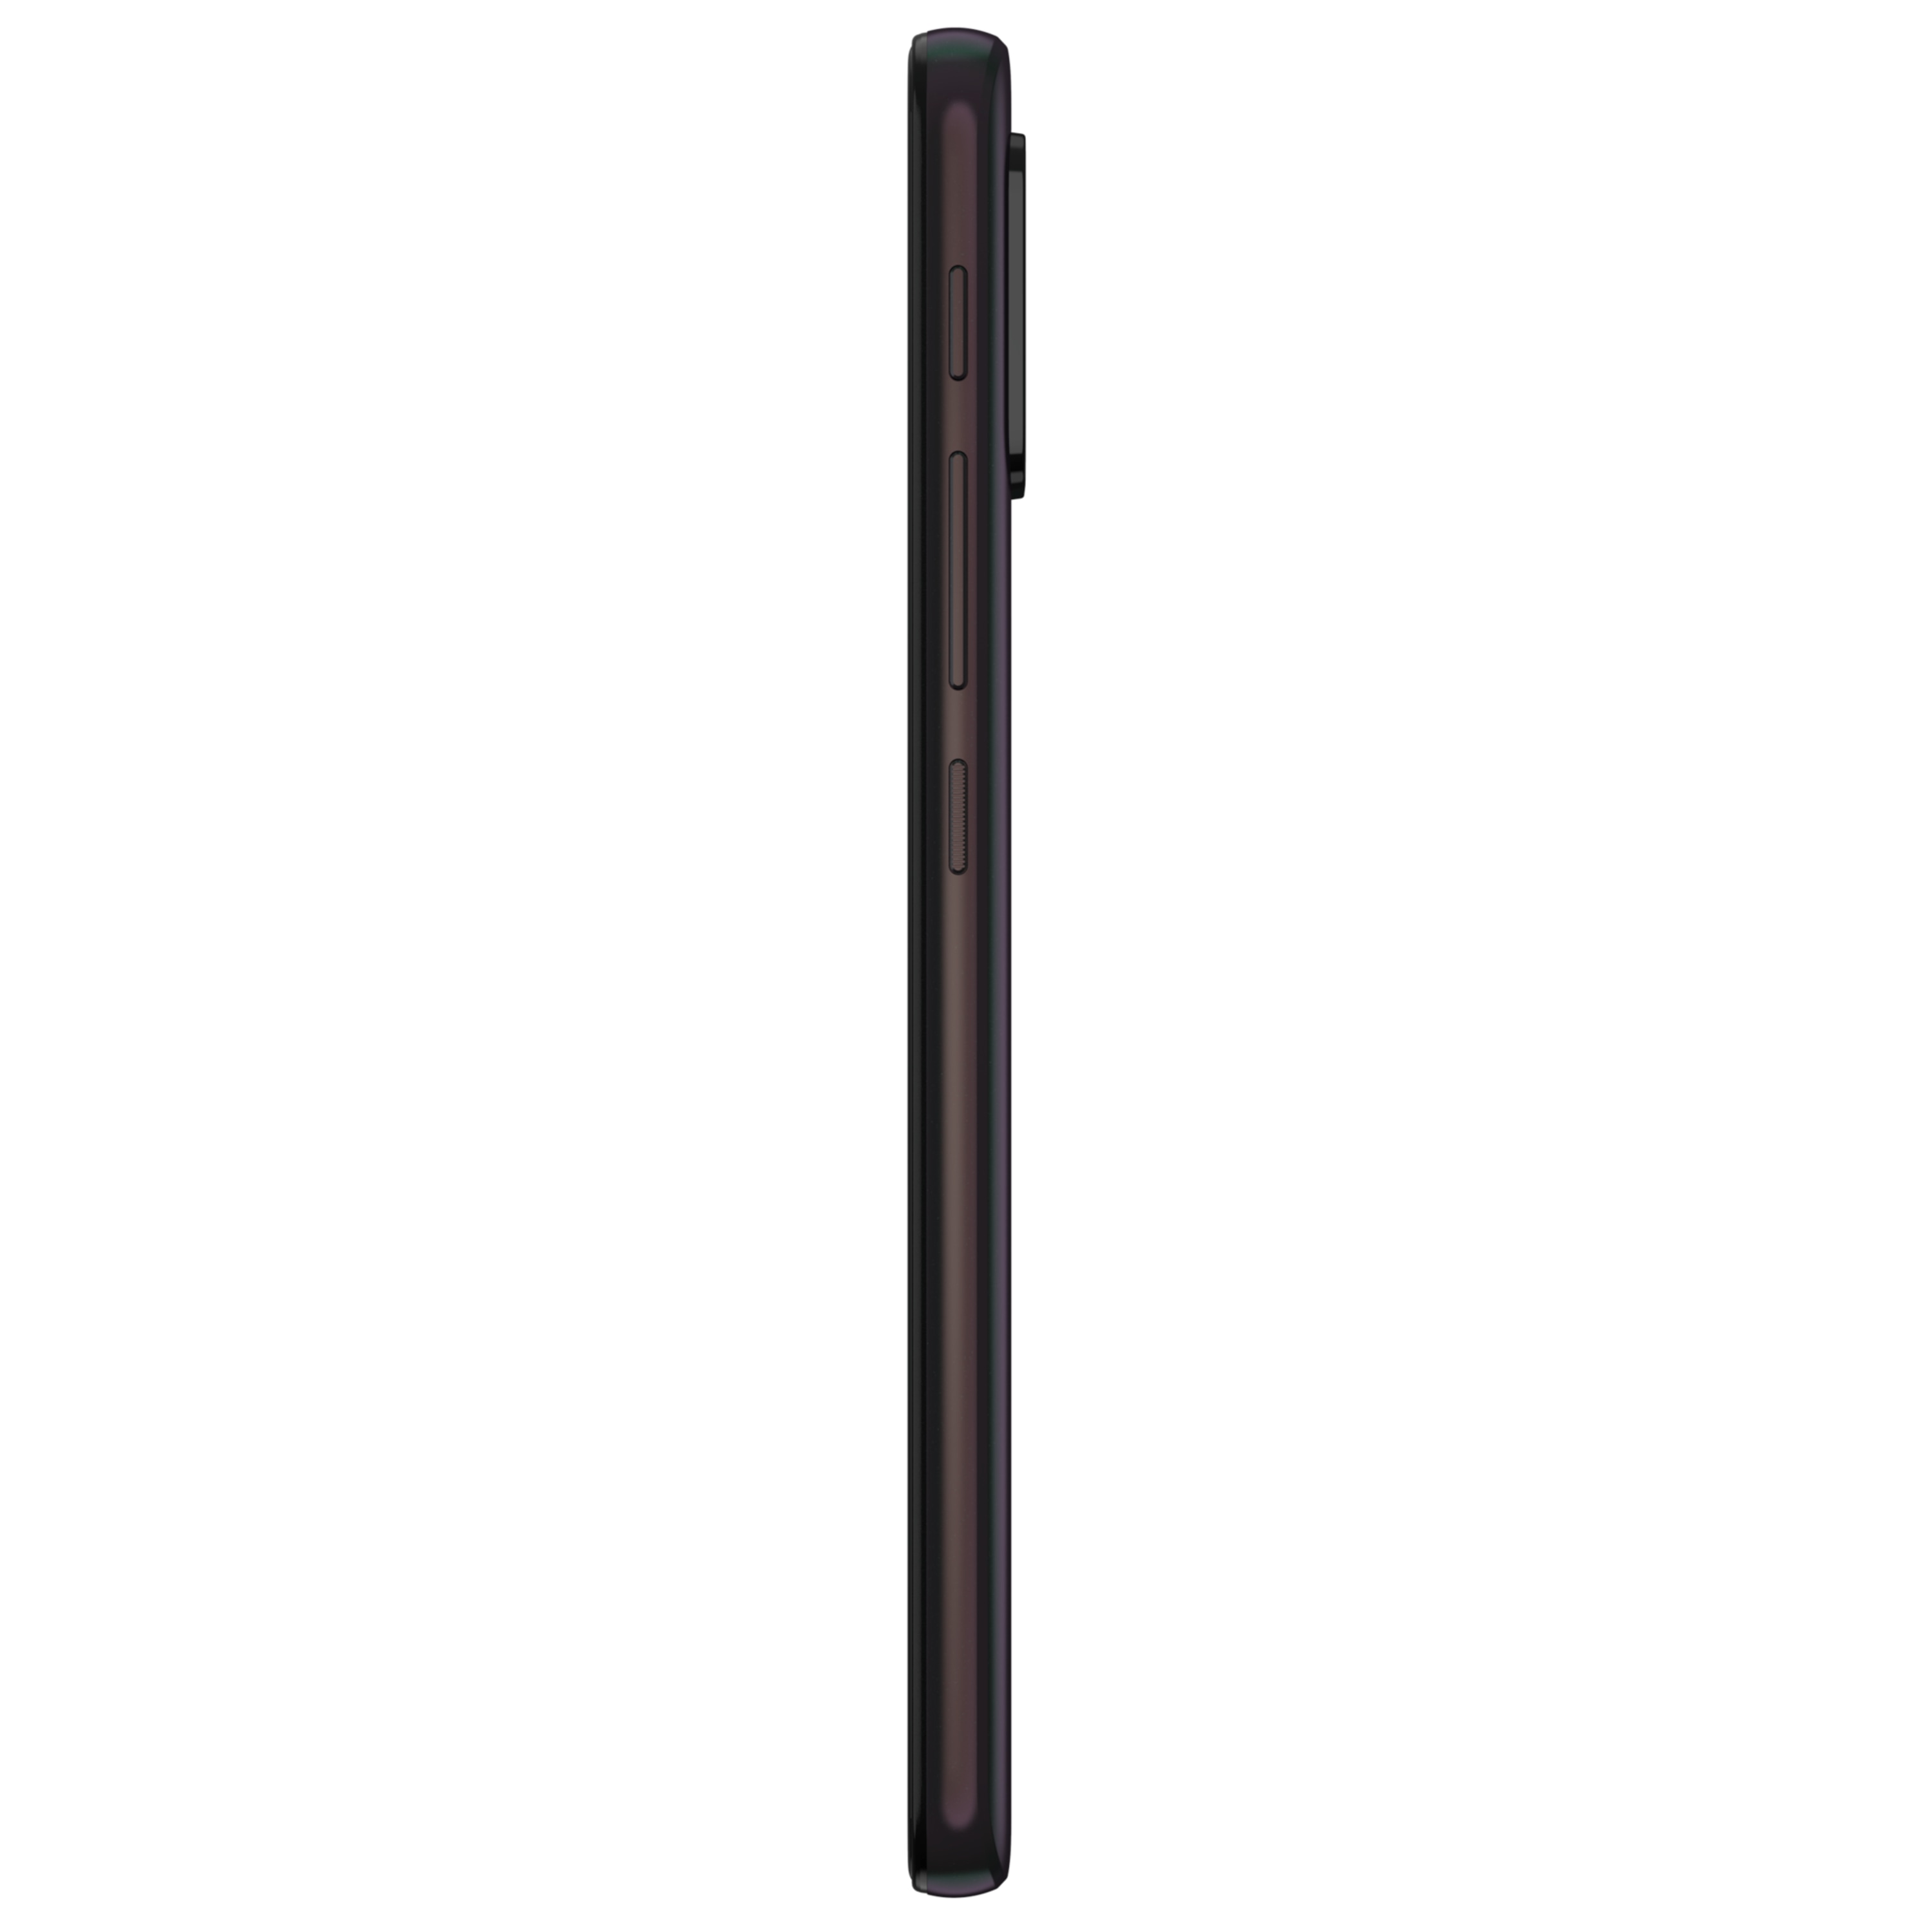 MOTOROLA moto G30 Smartphone, 16,51 cm (6,5") HD+ Display, Android™ 11, 128 GB Speicher, 4 GB Arbeitsspeicher, Octa-Core-Prozessor, Bluetooth® 5.0, Farbe: Dark Pearl